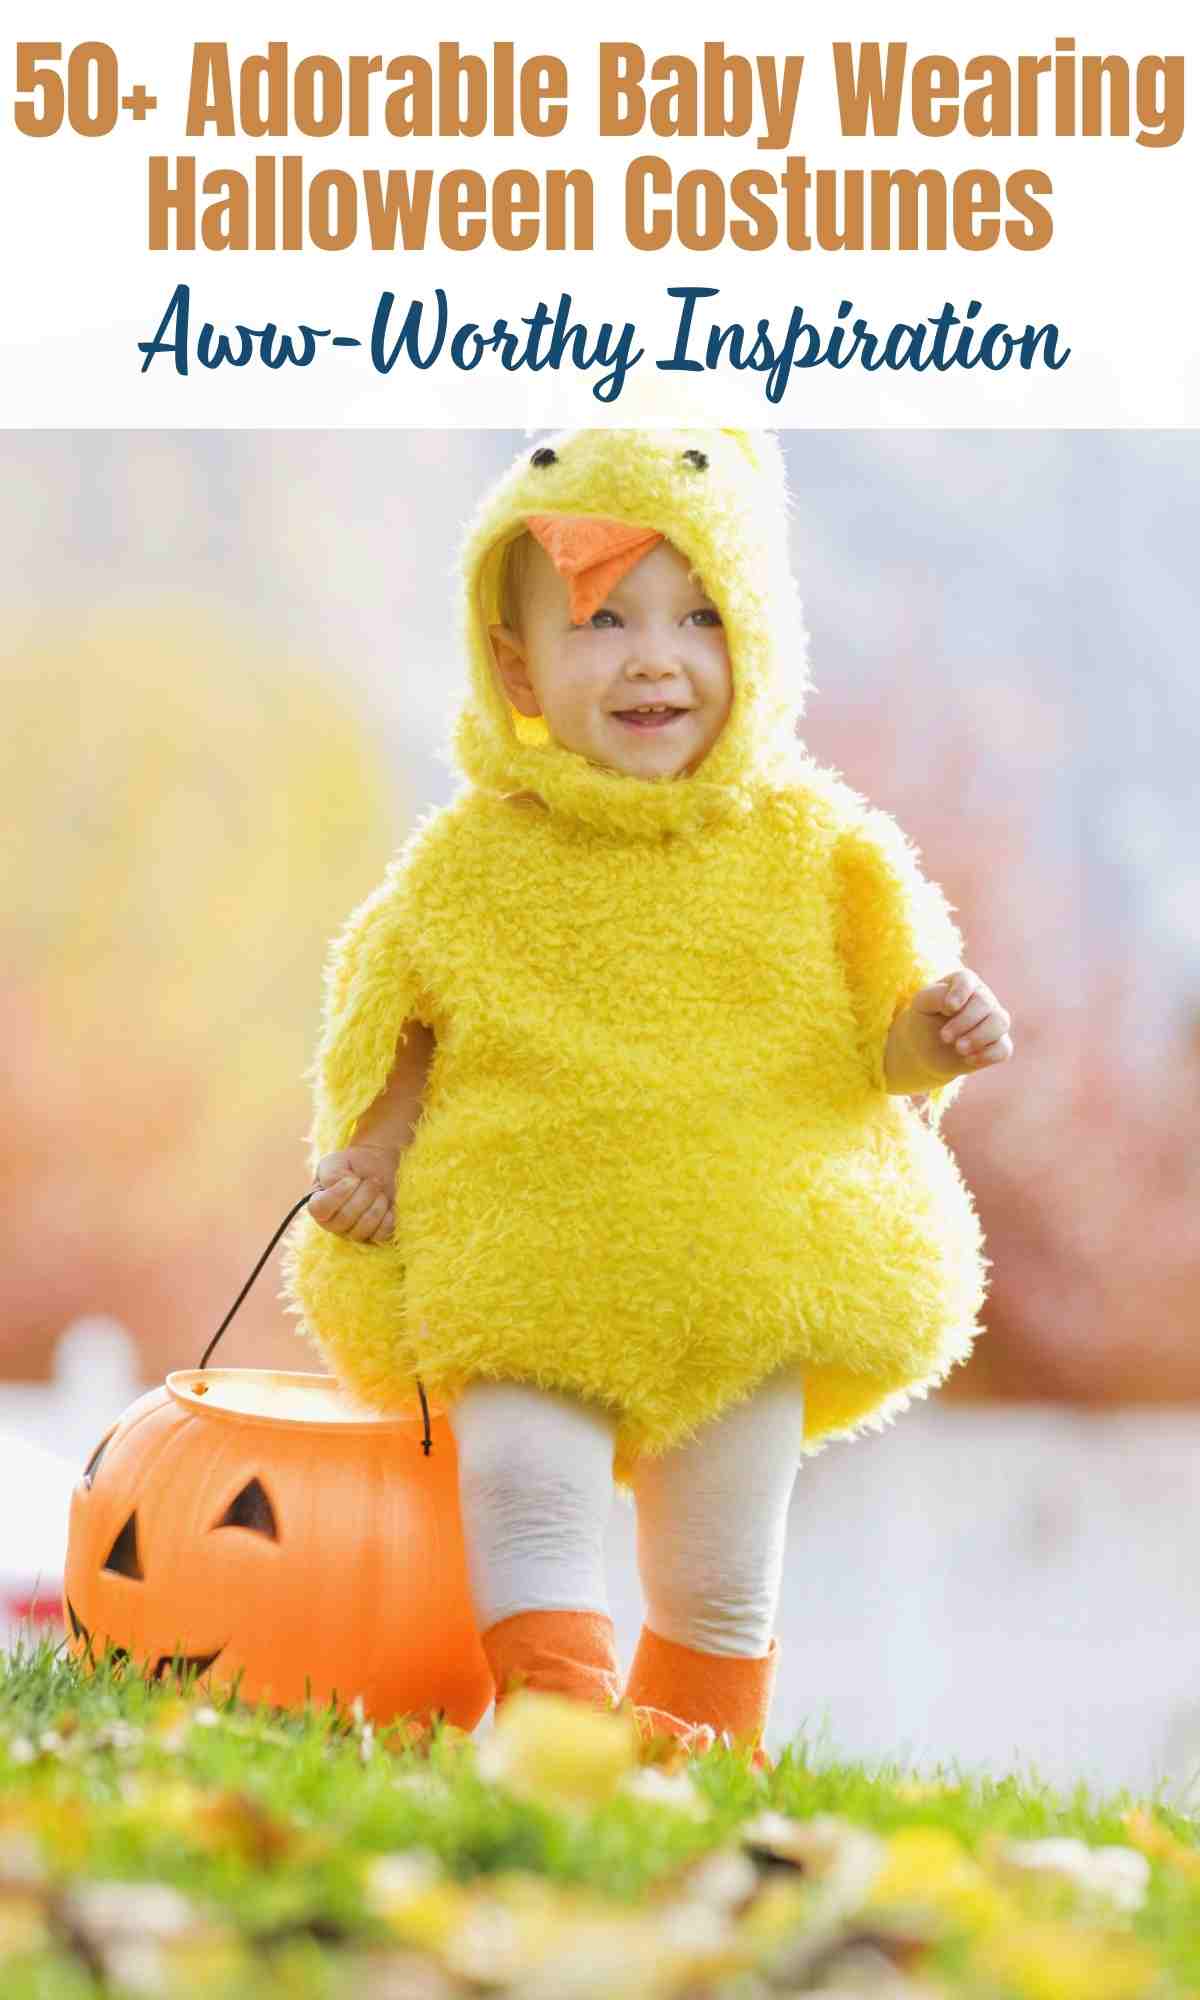 50+ Adorable Baby Wearing Halloween Costumes - Go Aww!